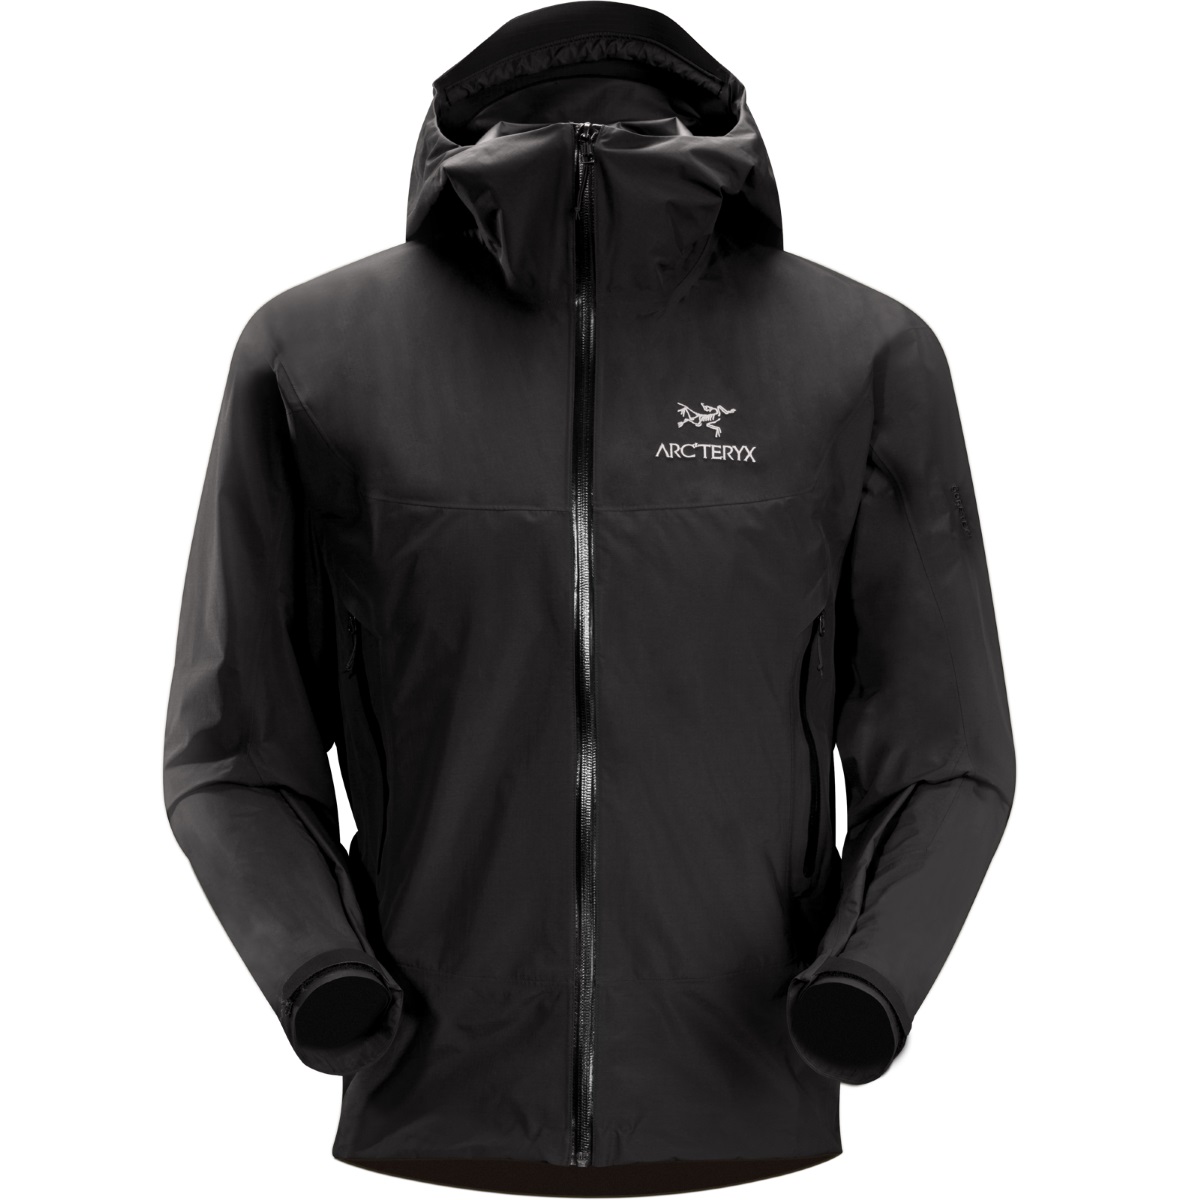 Arc'teryx Beta SL Jacket, men's, discontinued Fall 2015 colors (free